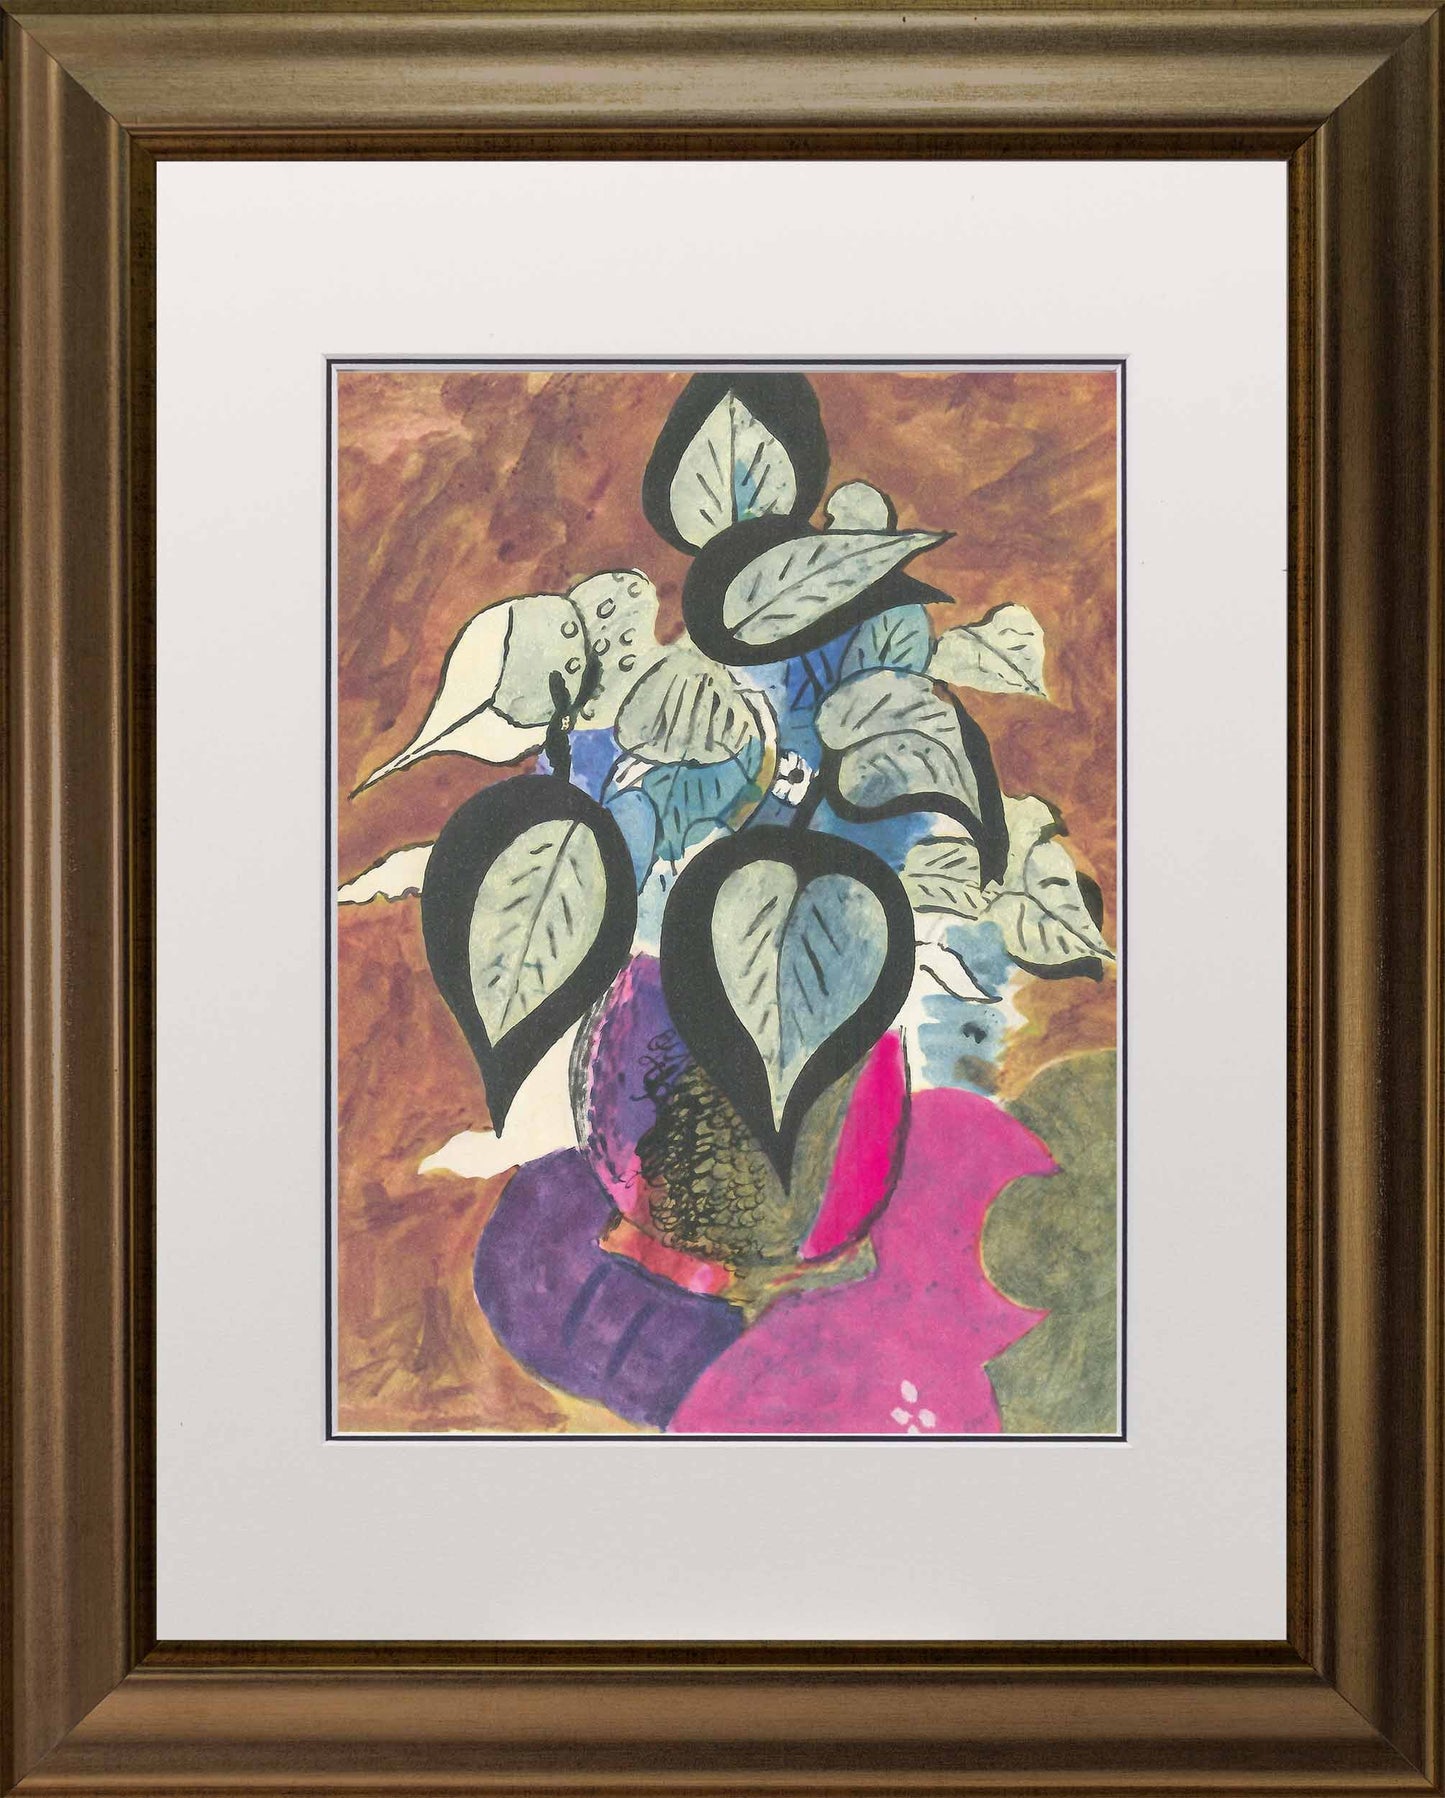 Georges Braque, "Untitled XVIII"